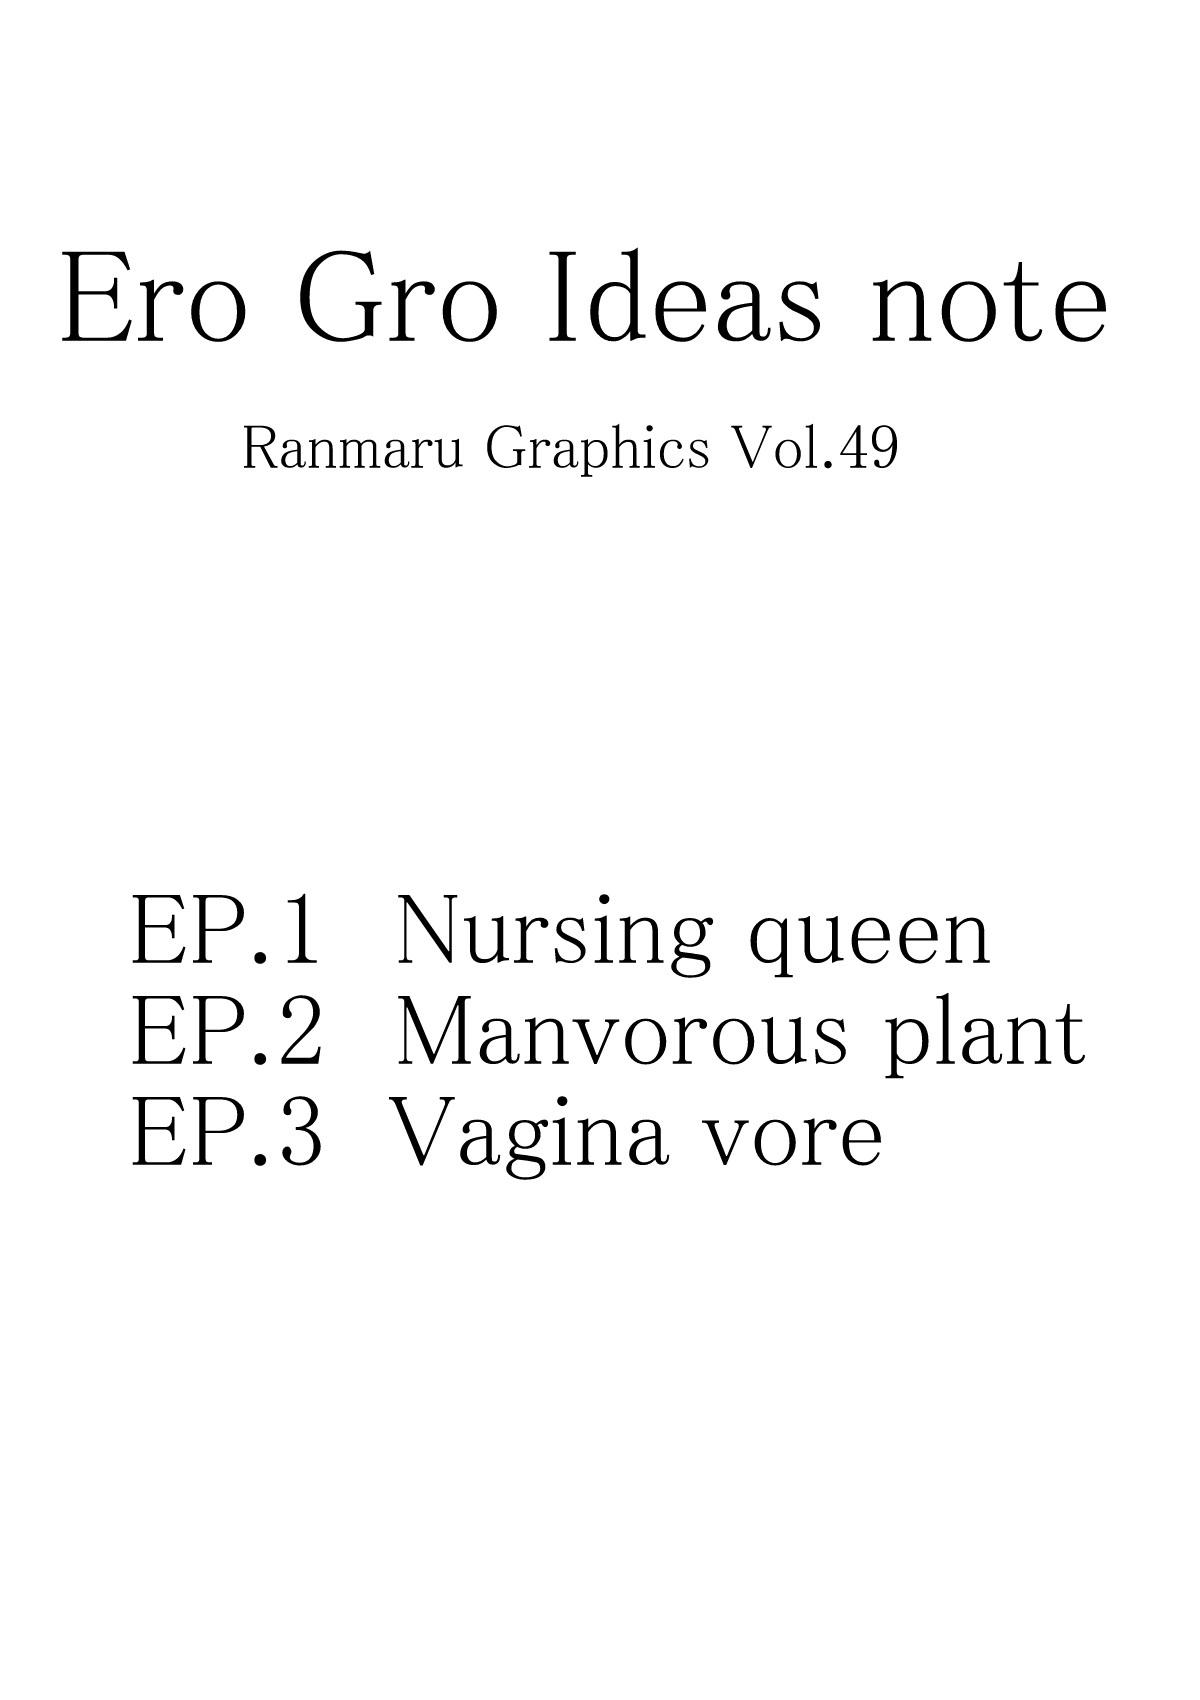 Ranmaru Graphics - Ero Gro Ideas Note 0